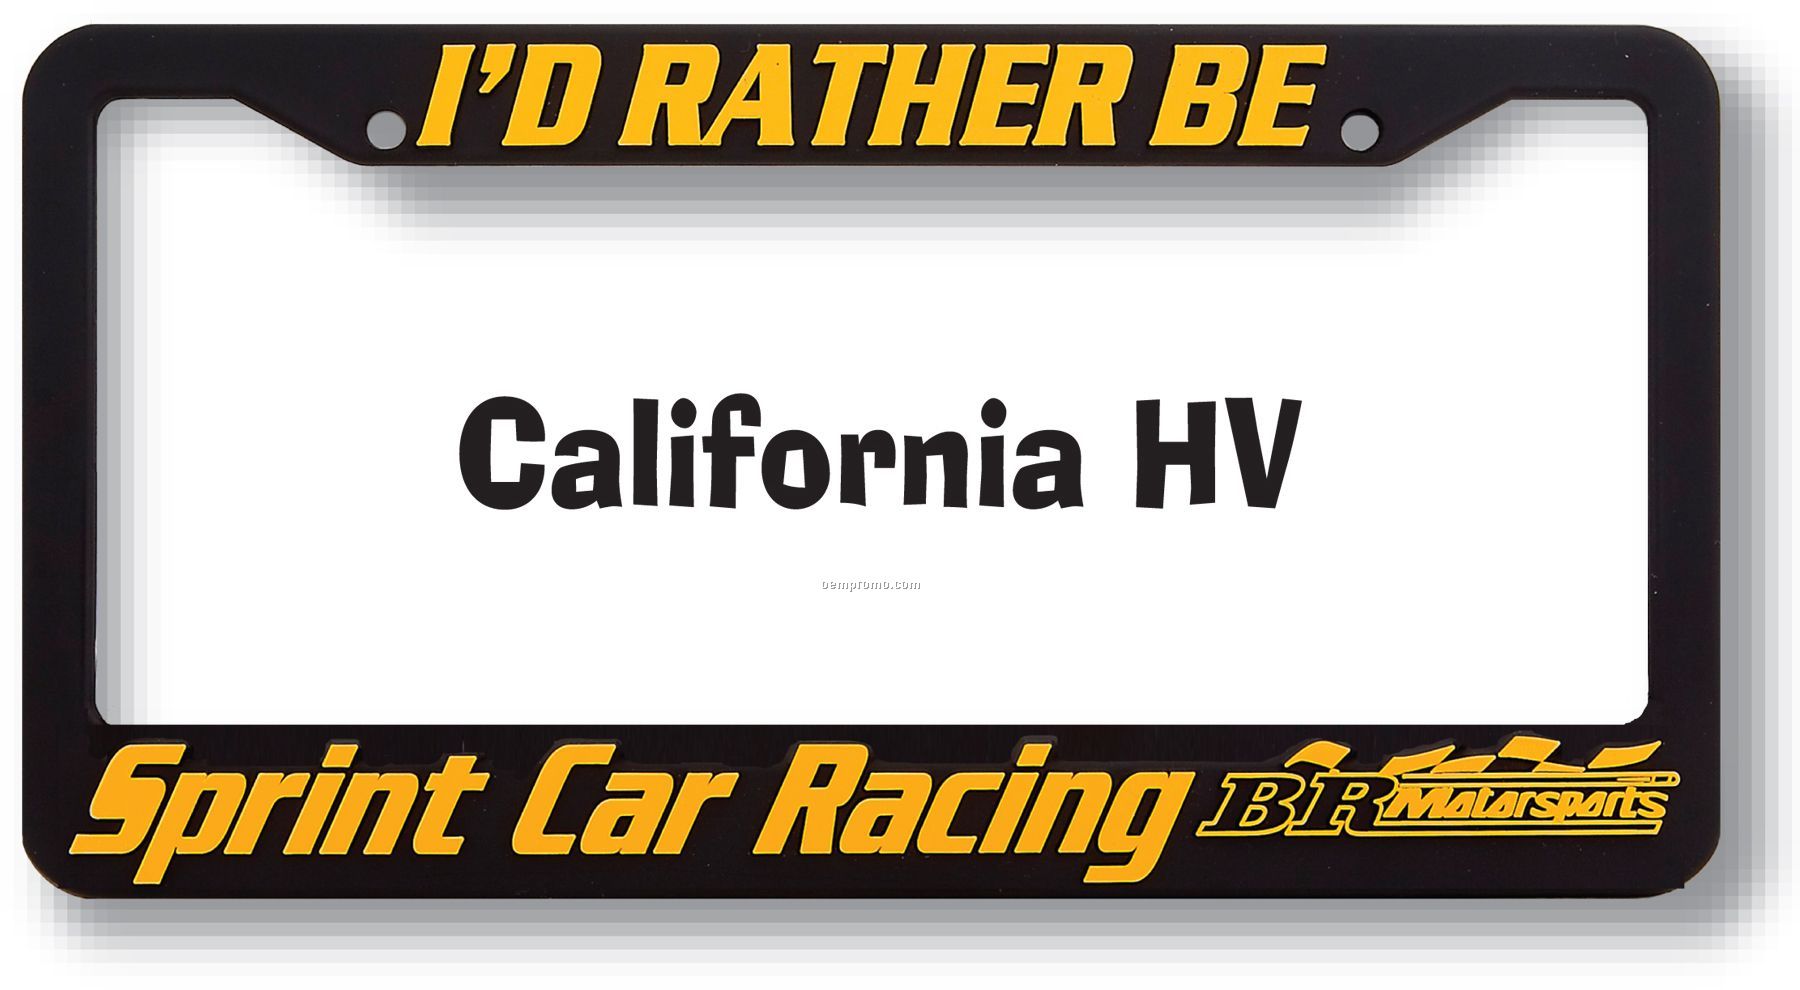 California High View (Hv) Raised Copy Plastic License Plate Frame